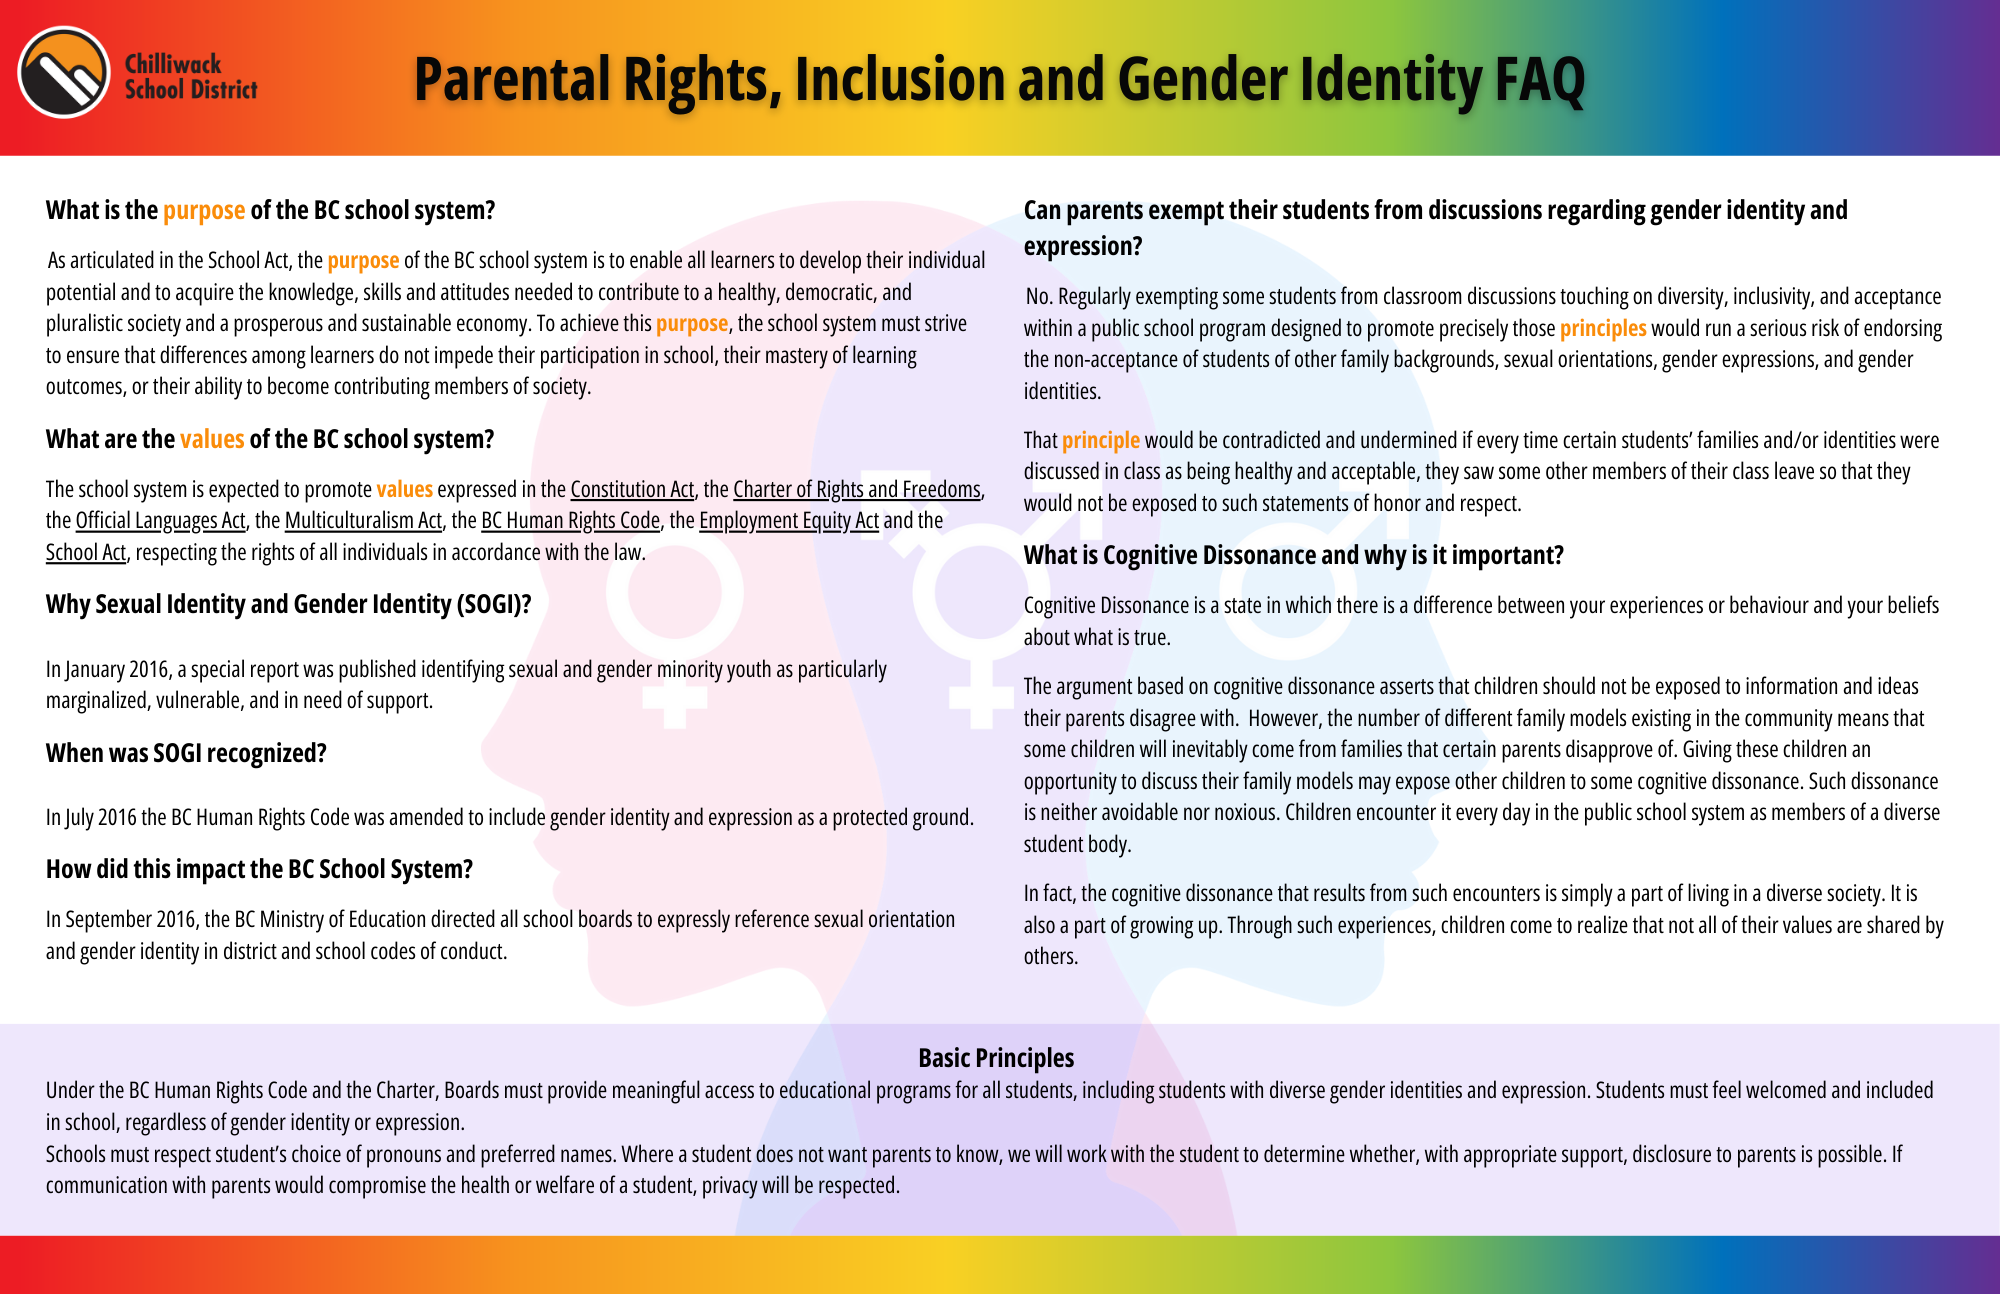 Image of Parental Rights FAQ